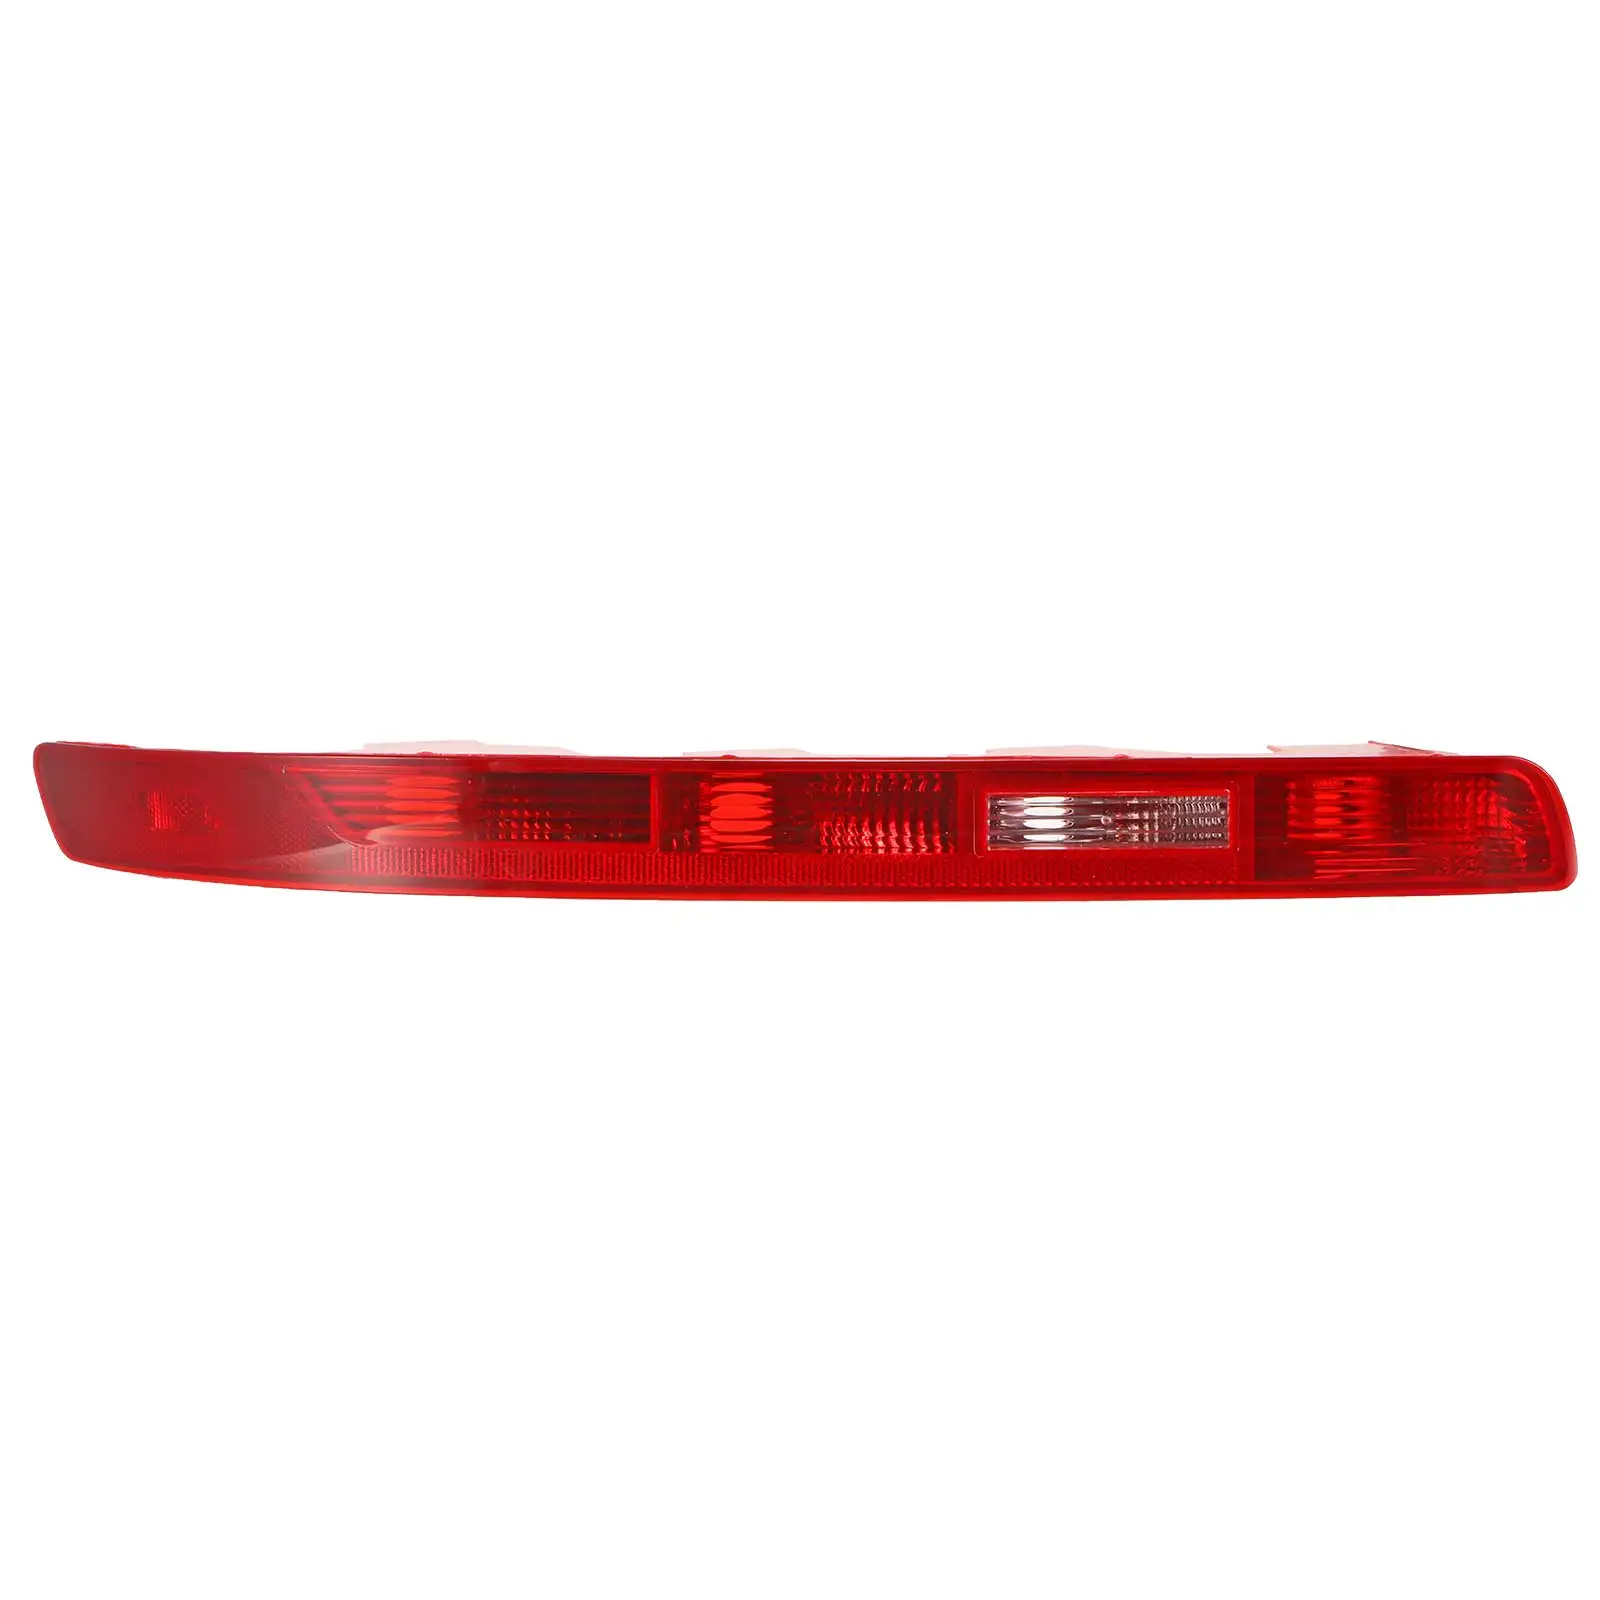 

1pcs Red Left/Right Passenger Lower Rear Bumper Tail Light For Audi Q5 09-16 противотуманные фары линзы для фар Auto Accessories